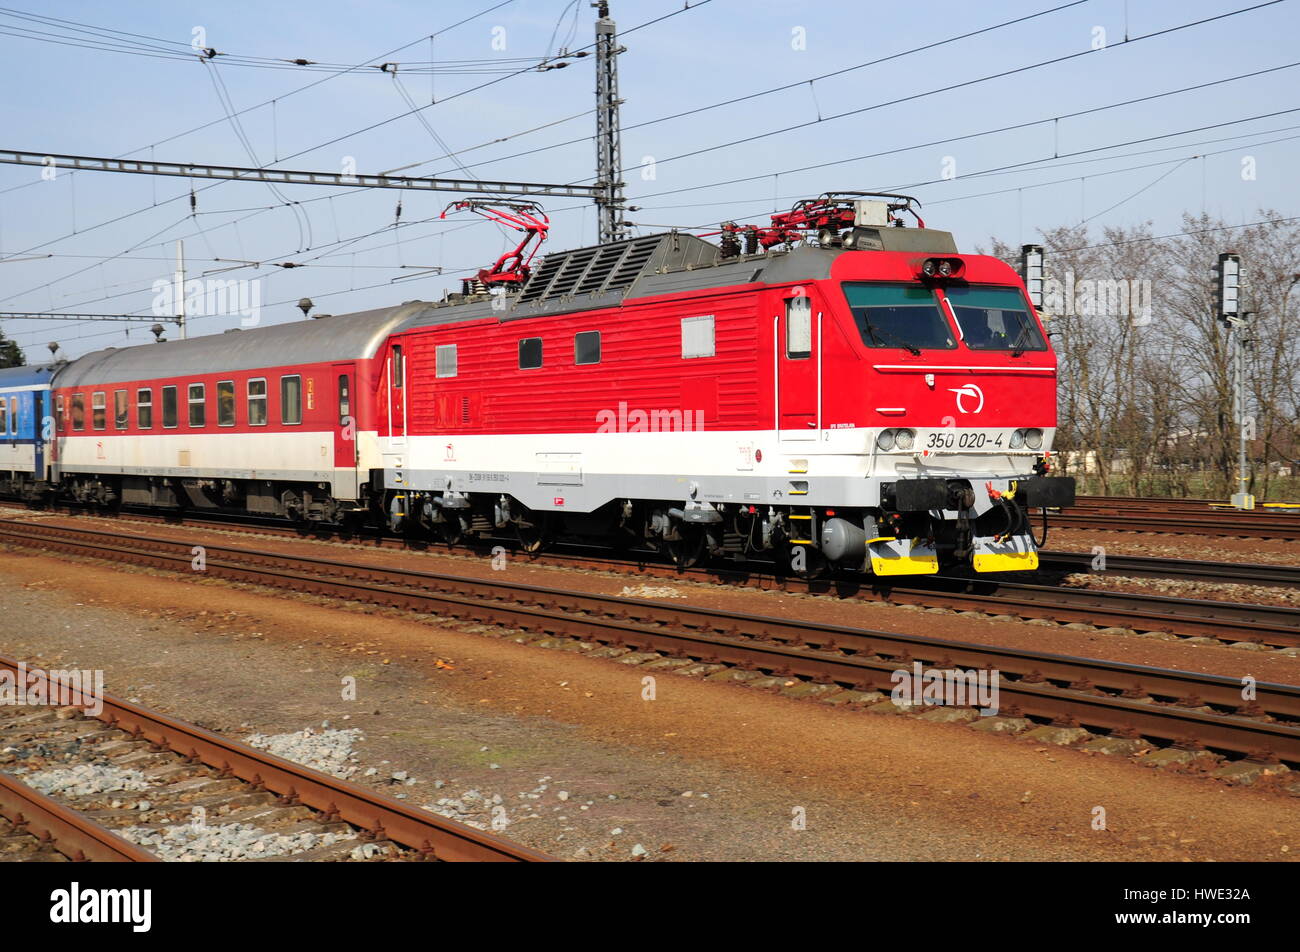 Railway passenger traffic, train, transport, locomotive, passenger Stock Photo